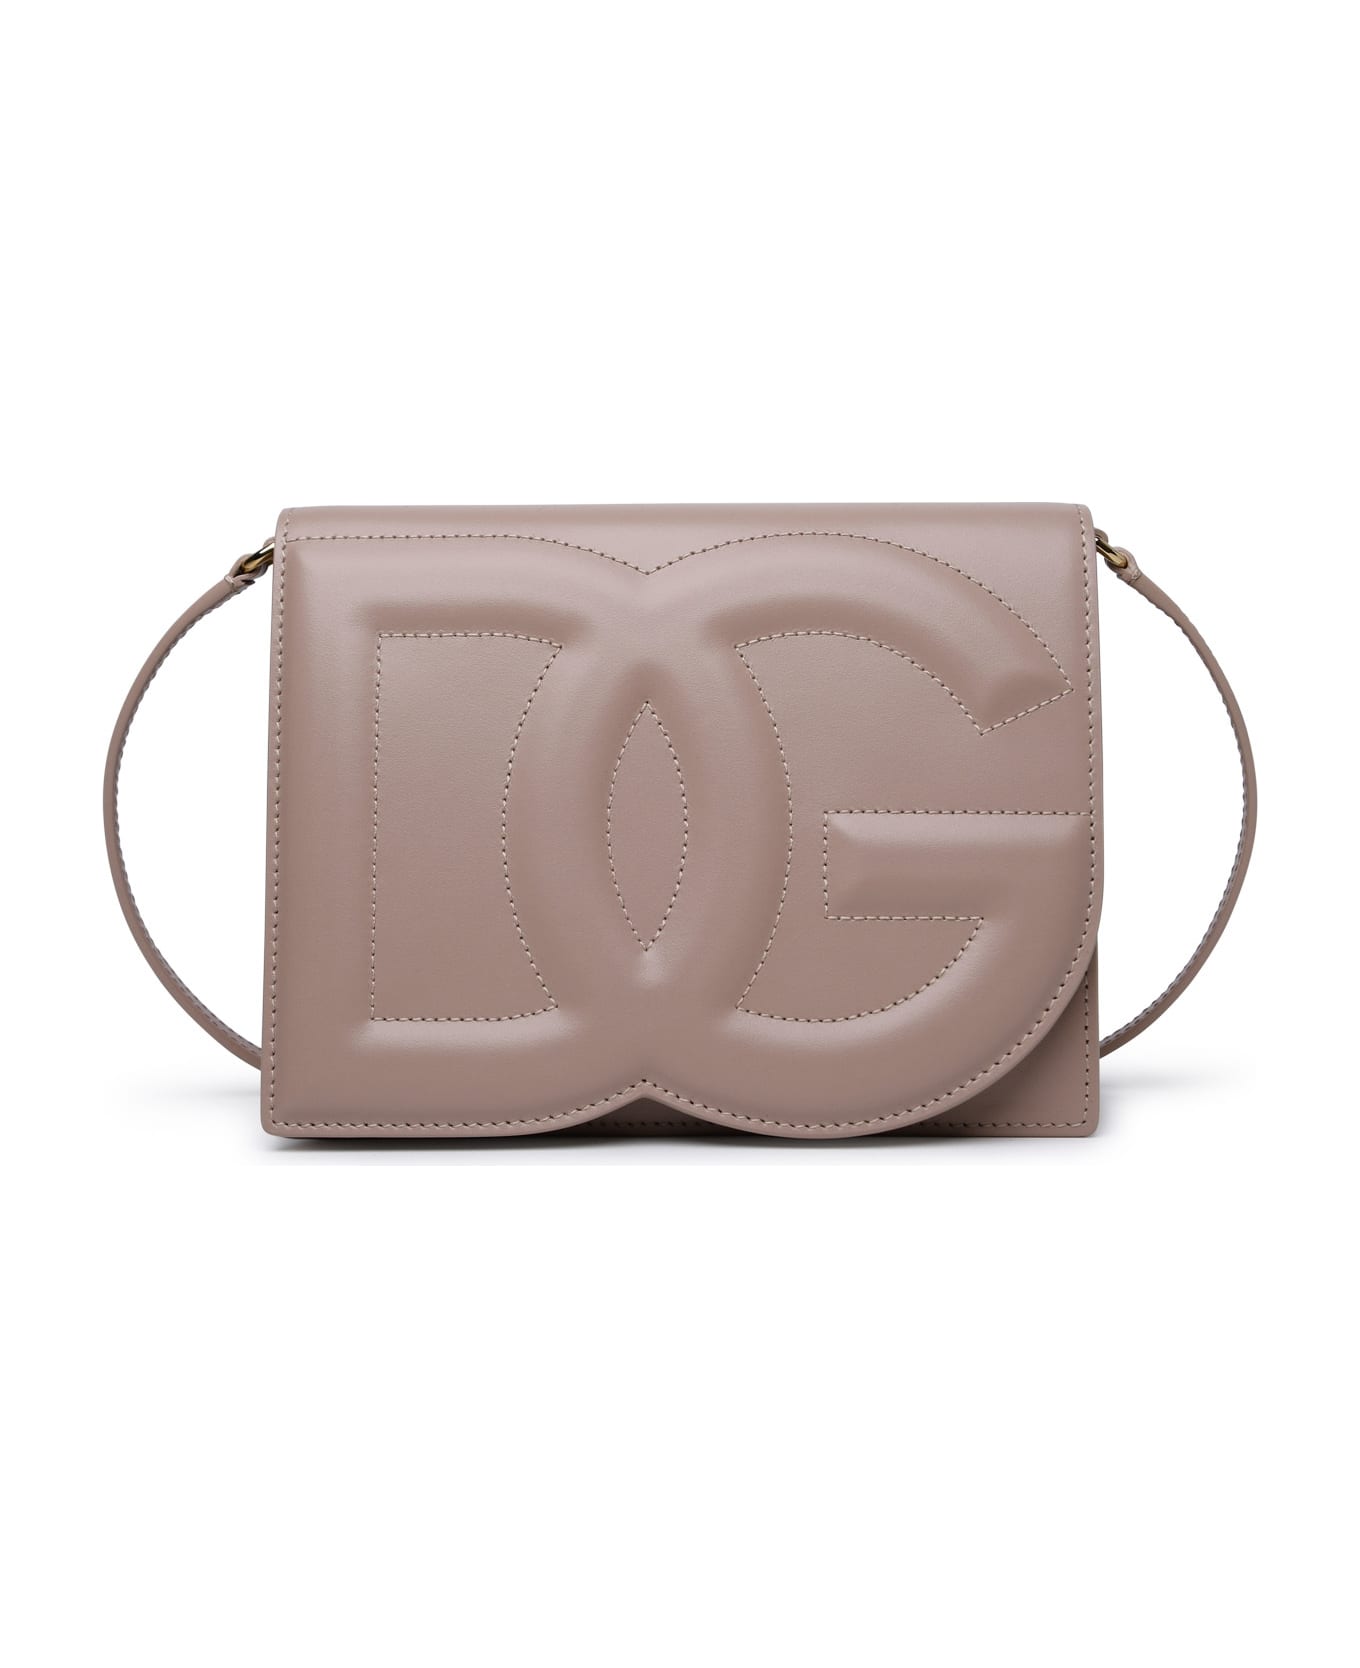 Dolce & Gabbana 'dg' Powder Calf Leather Bag - Nude